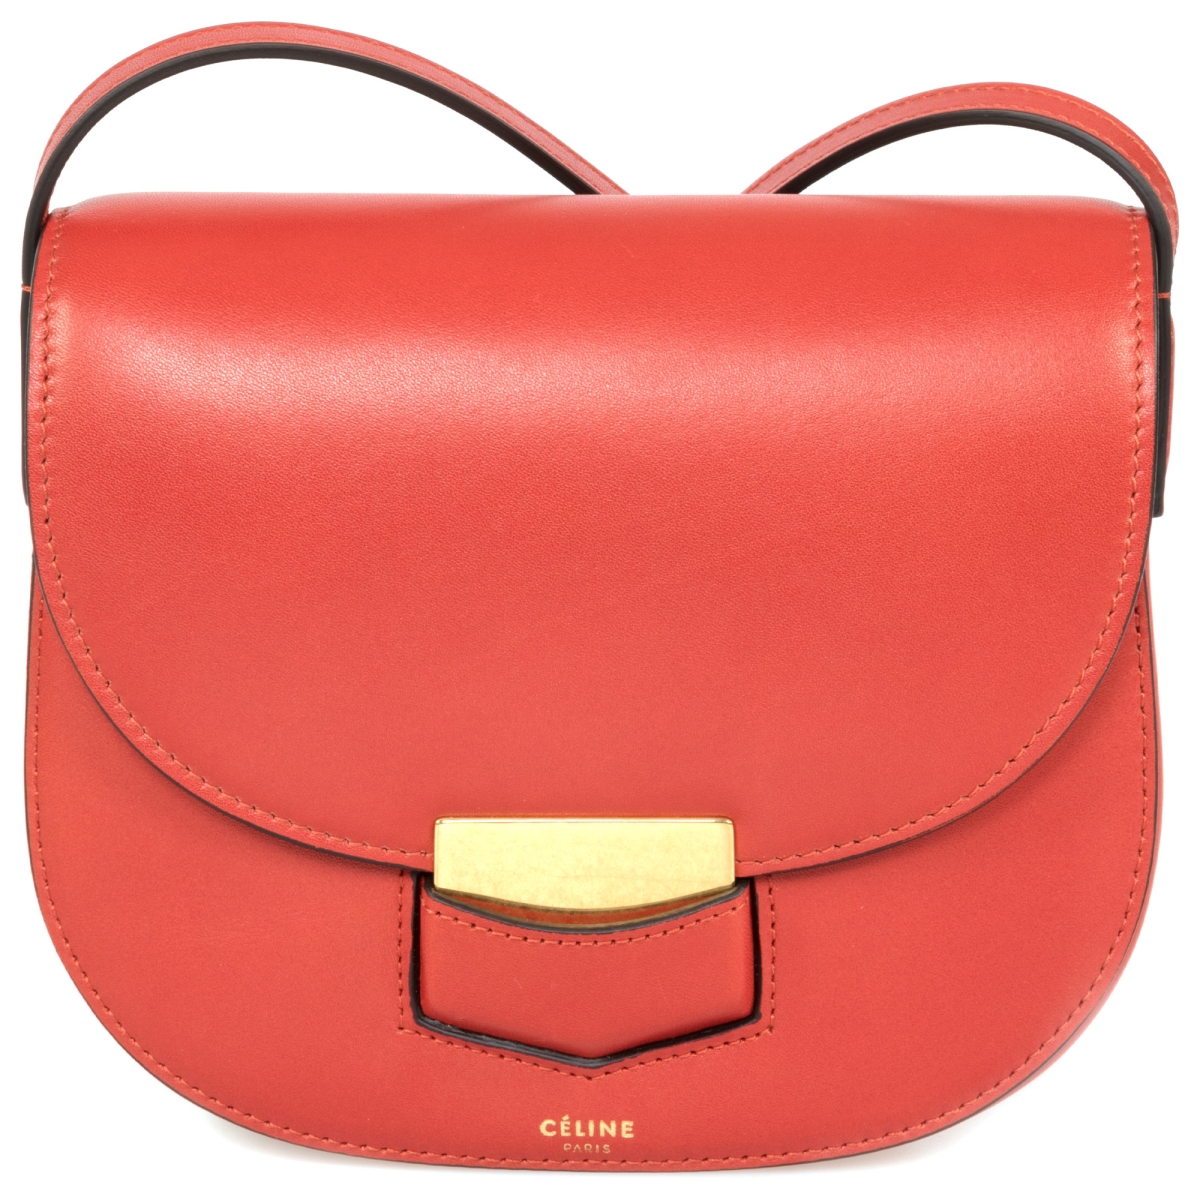 Cel-hbag-trotteur-red-s Trotteur Small Red Calfskin Leather Crossbody Handbag